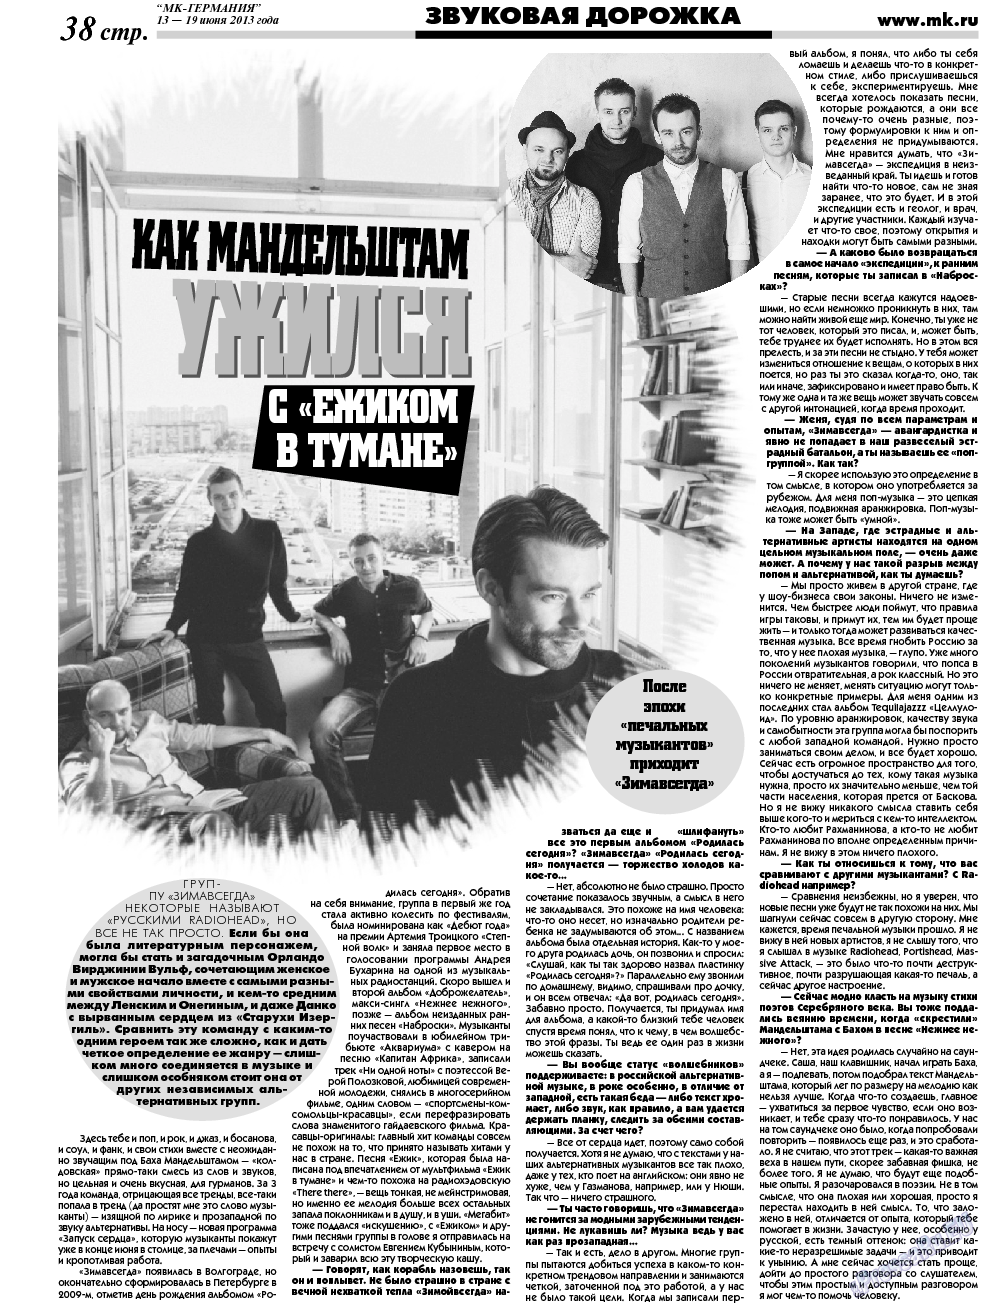 МК-Германия, газета. 2013 №24 стр.38